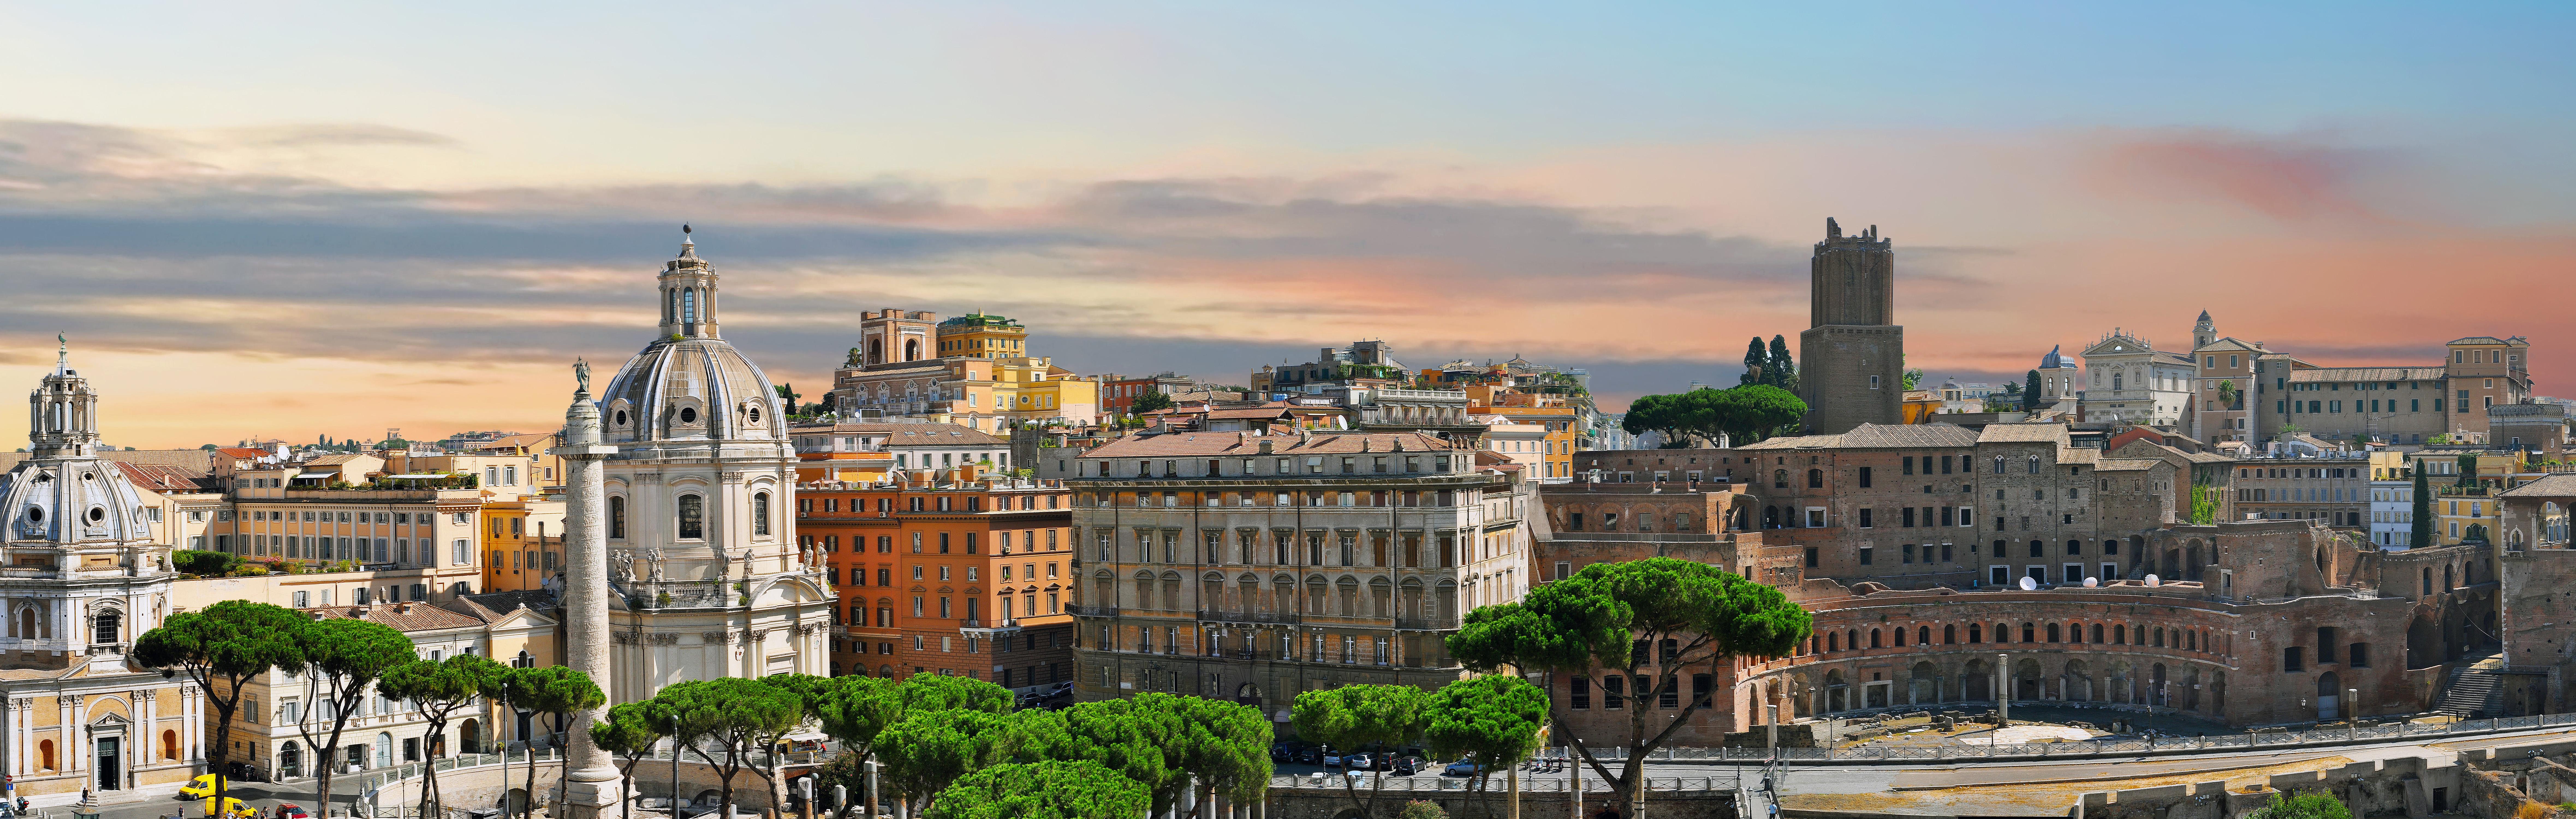 L'ancien Forum, Roma - Italie  - 2012 -  Photographie couleur Panoramic contemporaine